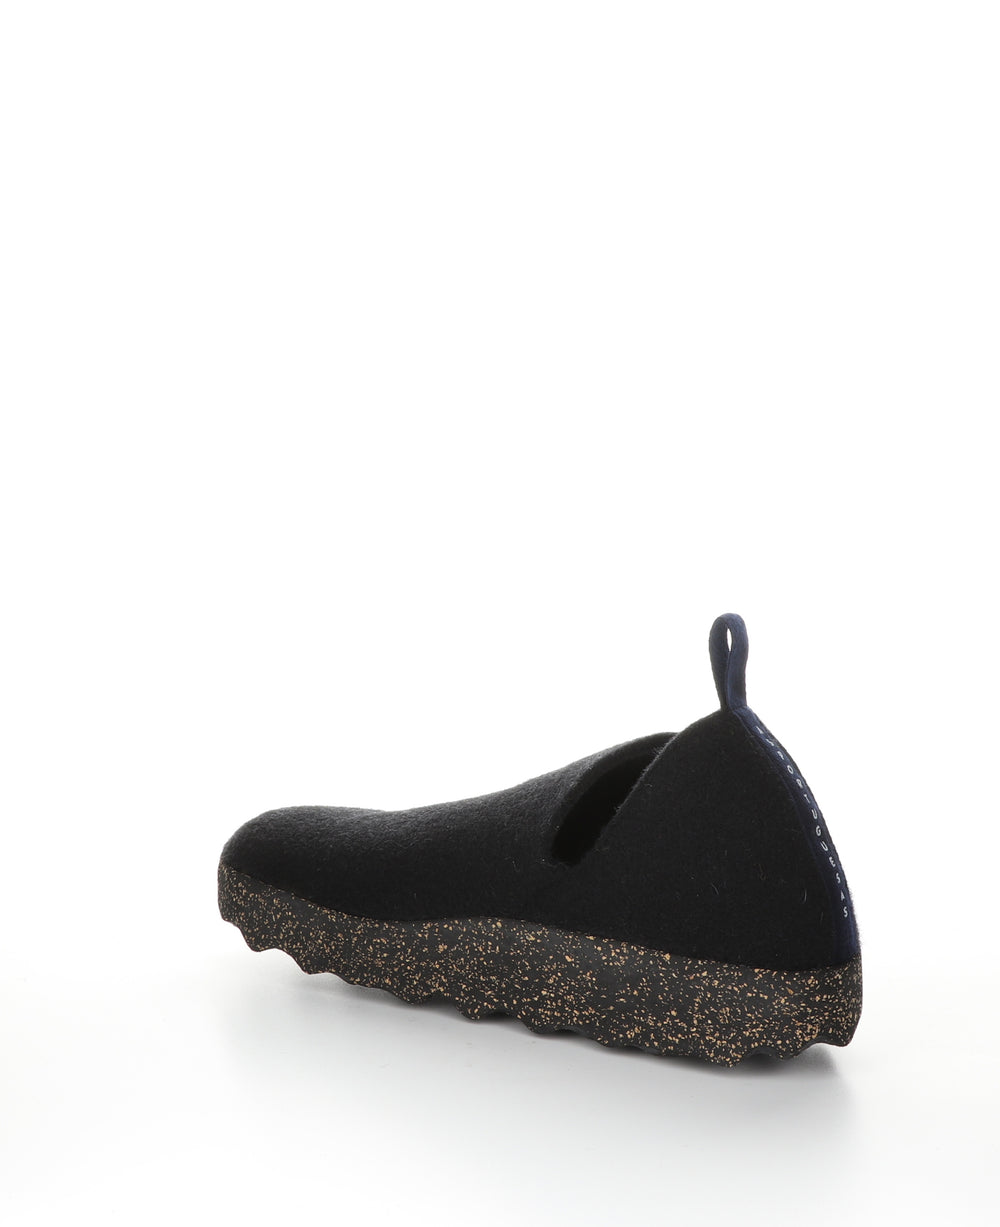 CITYM Black Round Toe Shoes|CITYM Chaussures à Bout Rond in Noir